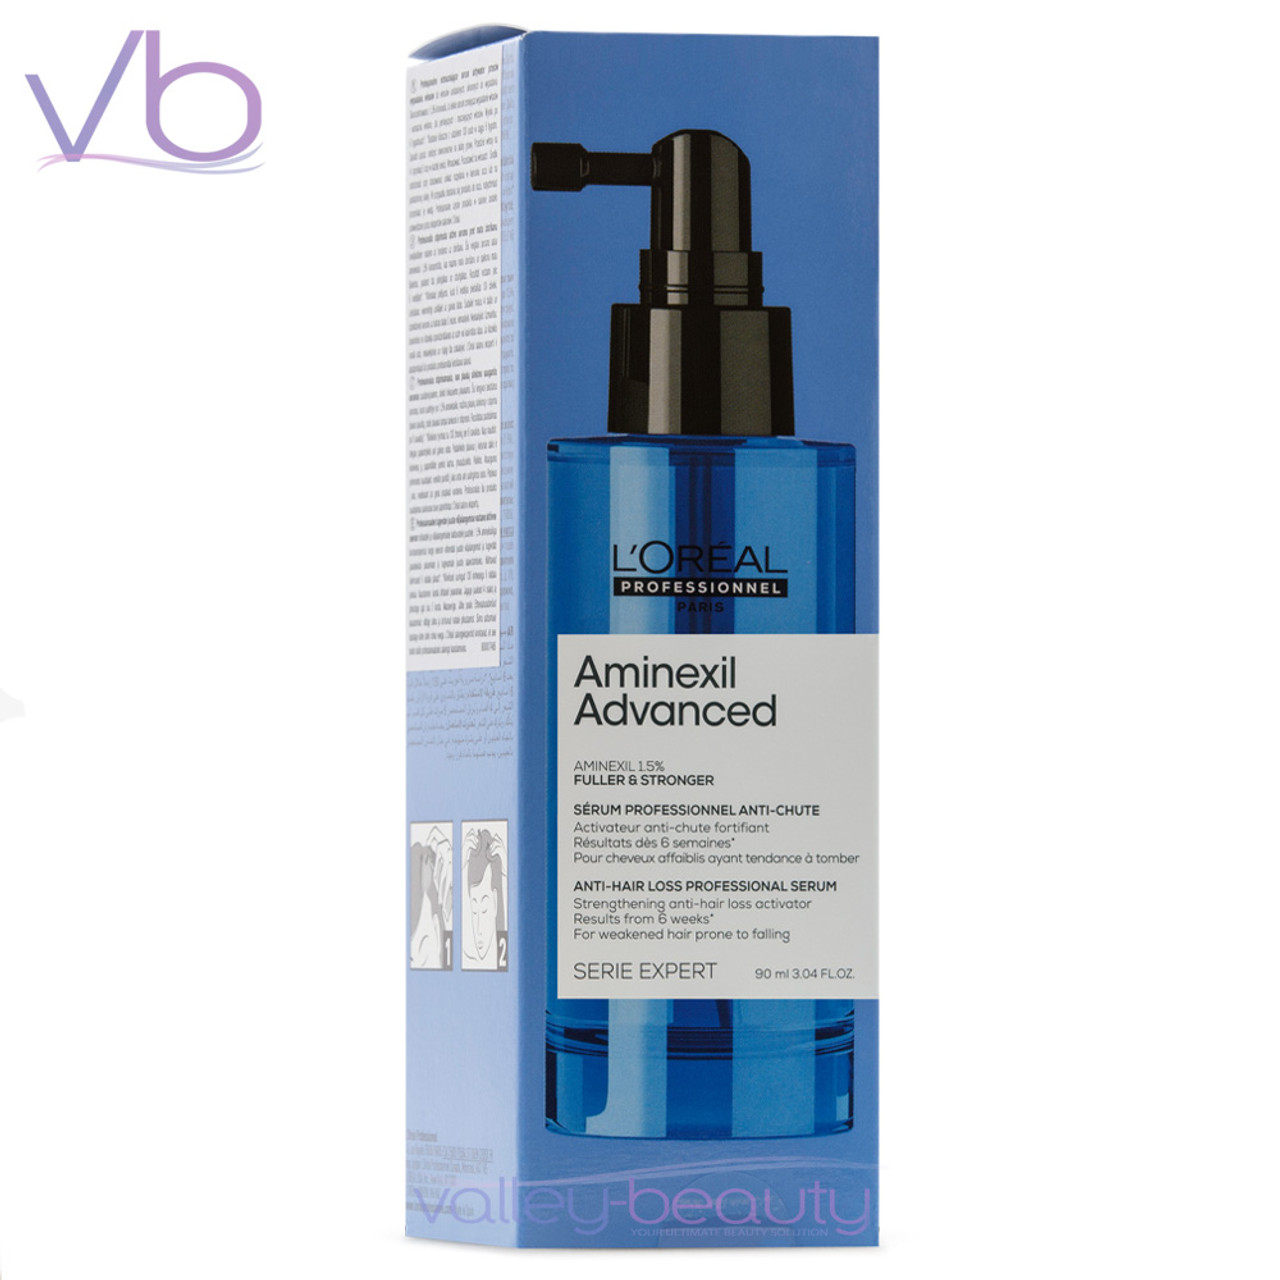 L'Oreal L’Oreal Aminexil Advanced Serum | Anti-Hair Loss Treatment for Men and Women, 90ml